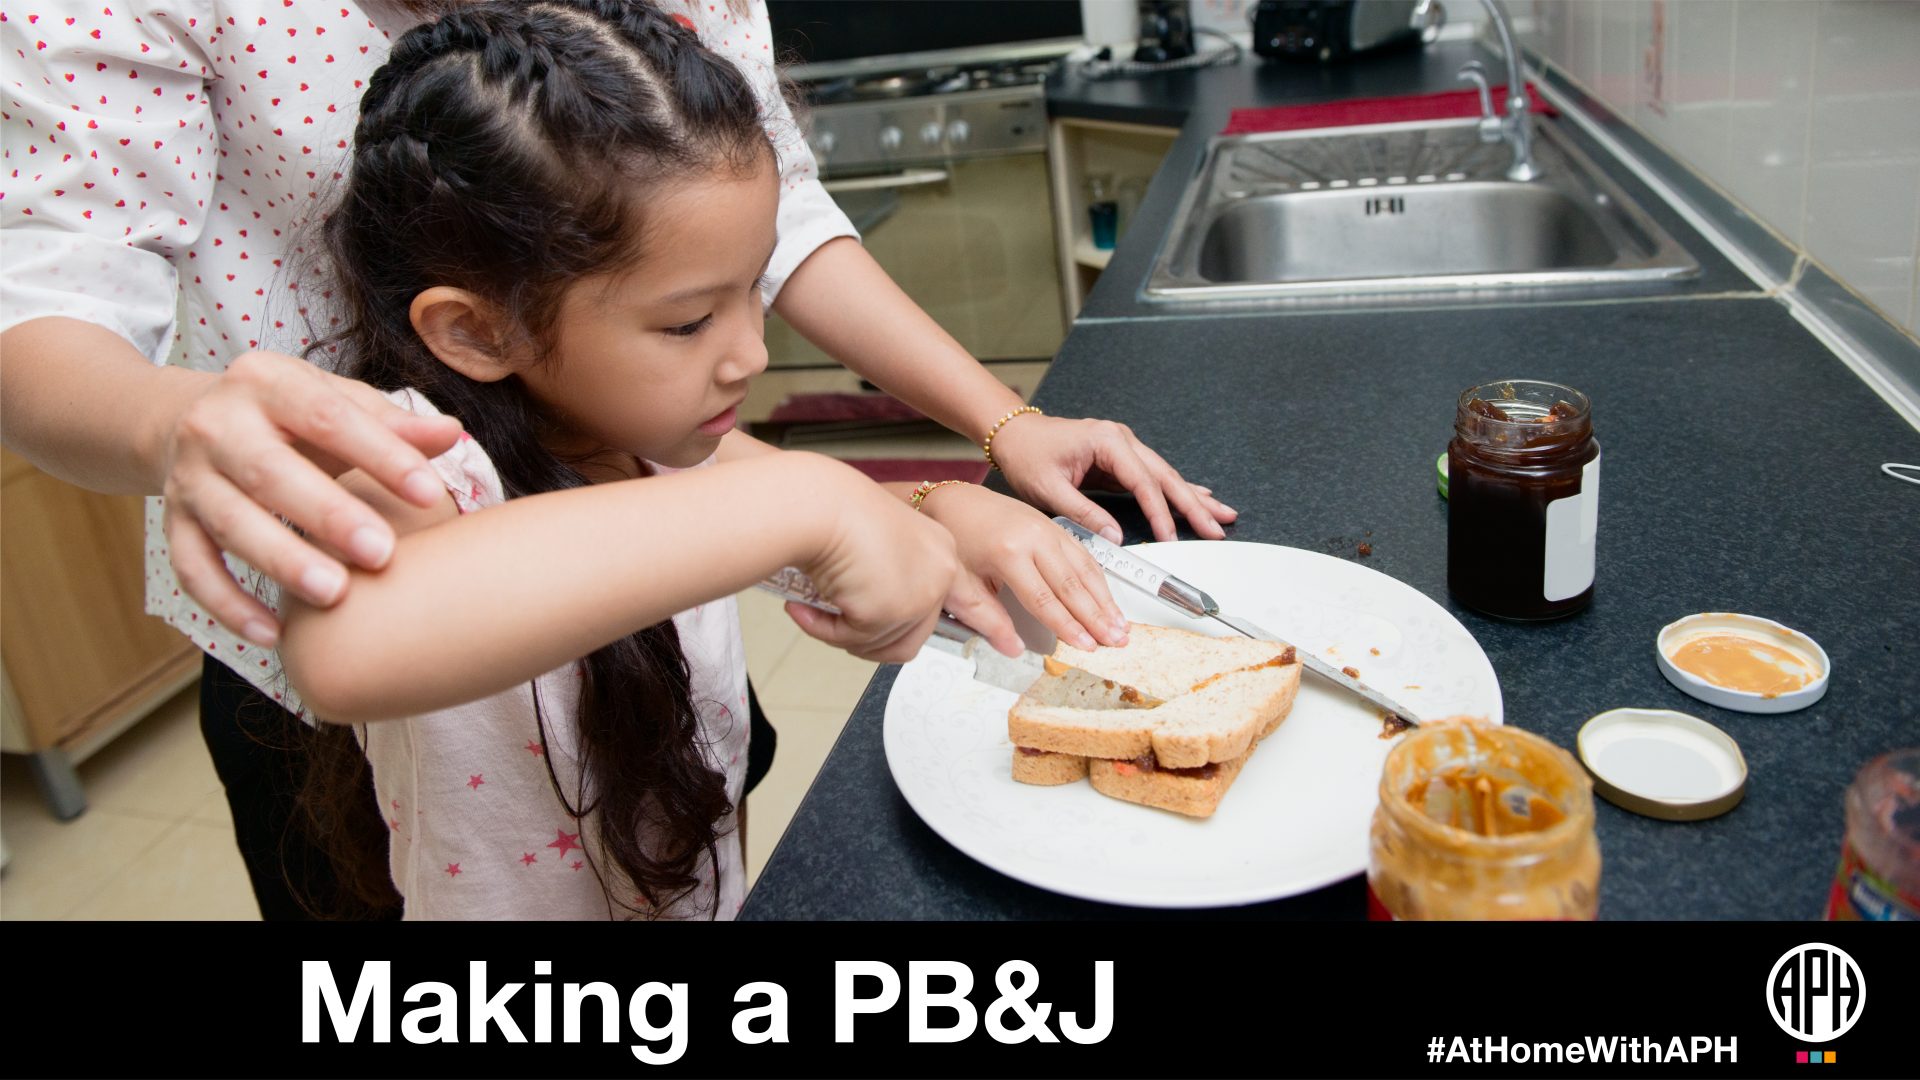 a child cutting a peanut butter sandwich with a parents help. text reads "Making a PB&J #AtHomeWithAPH"